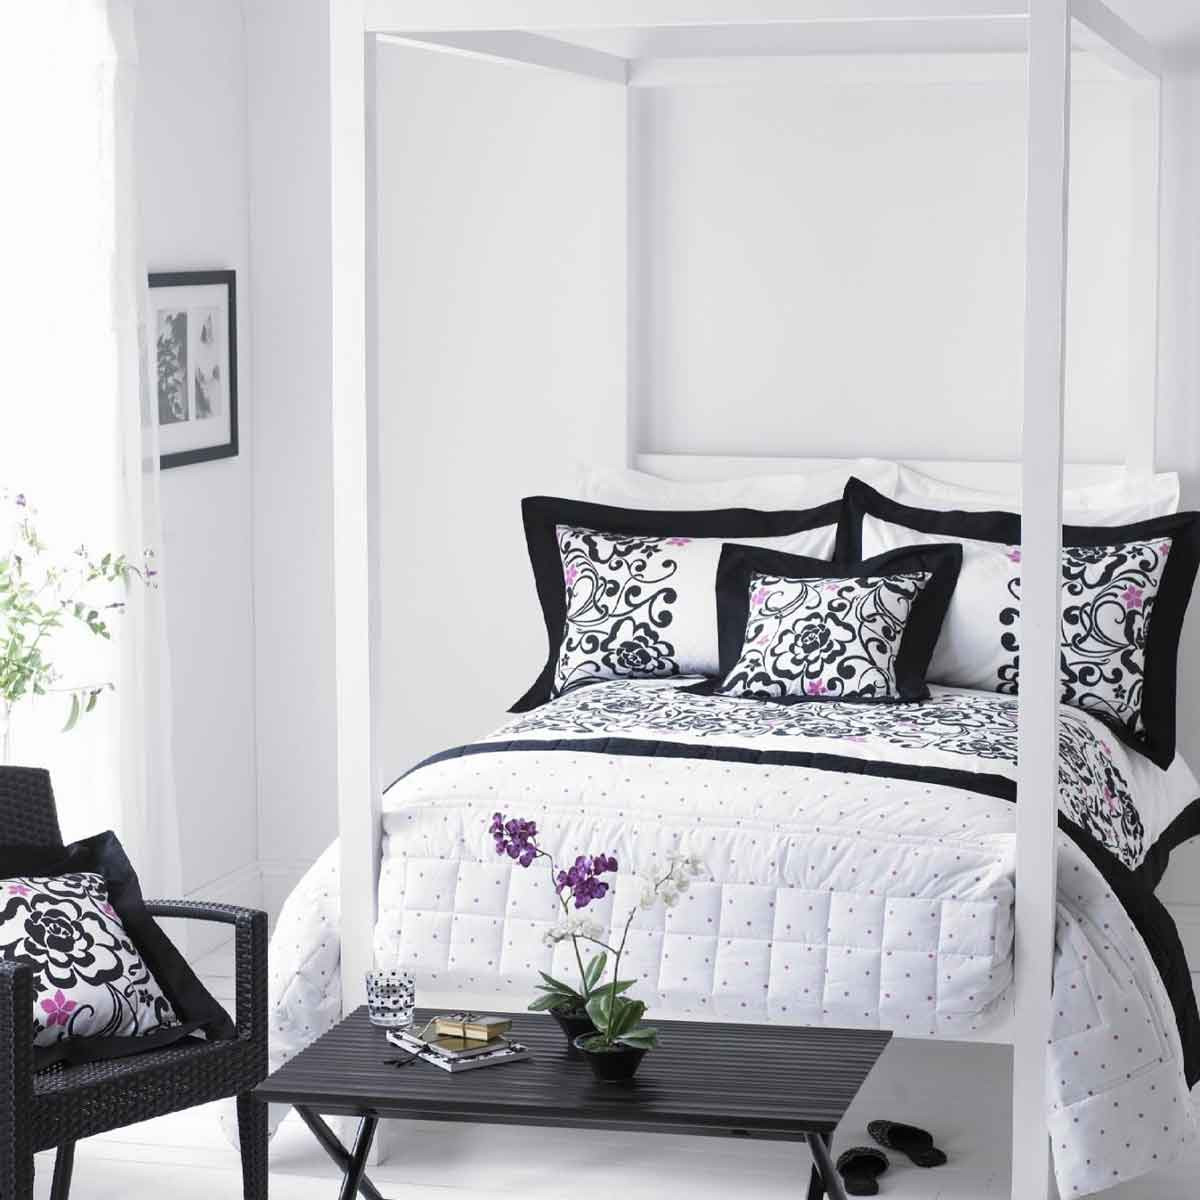 Black Bedroom Decor
 30 Groovy Black And White Bedroom Ideas SloDive